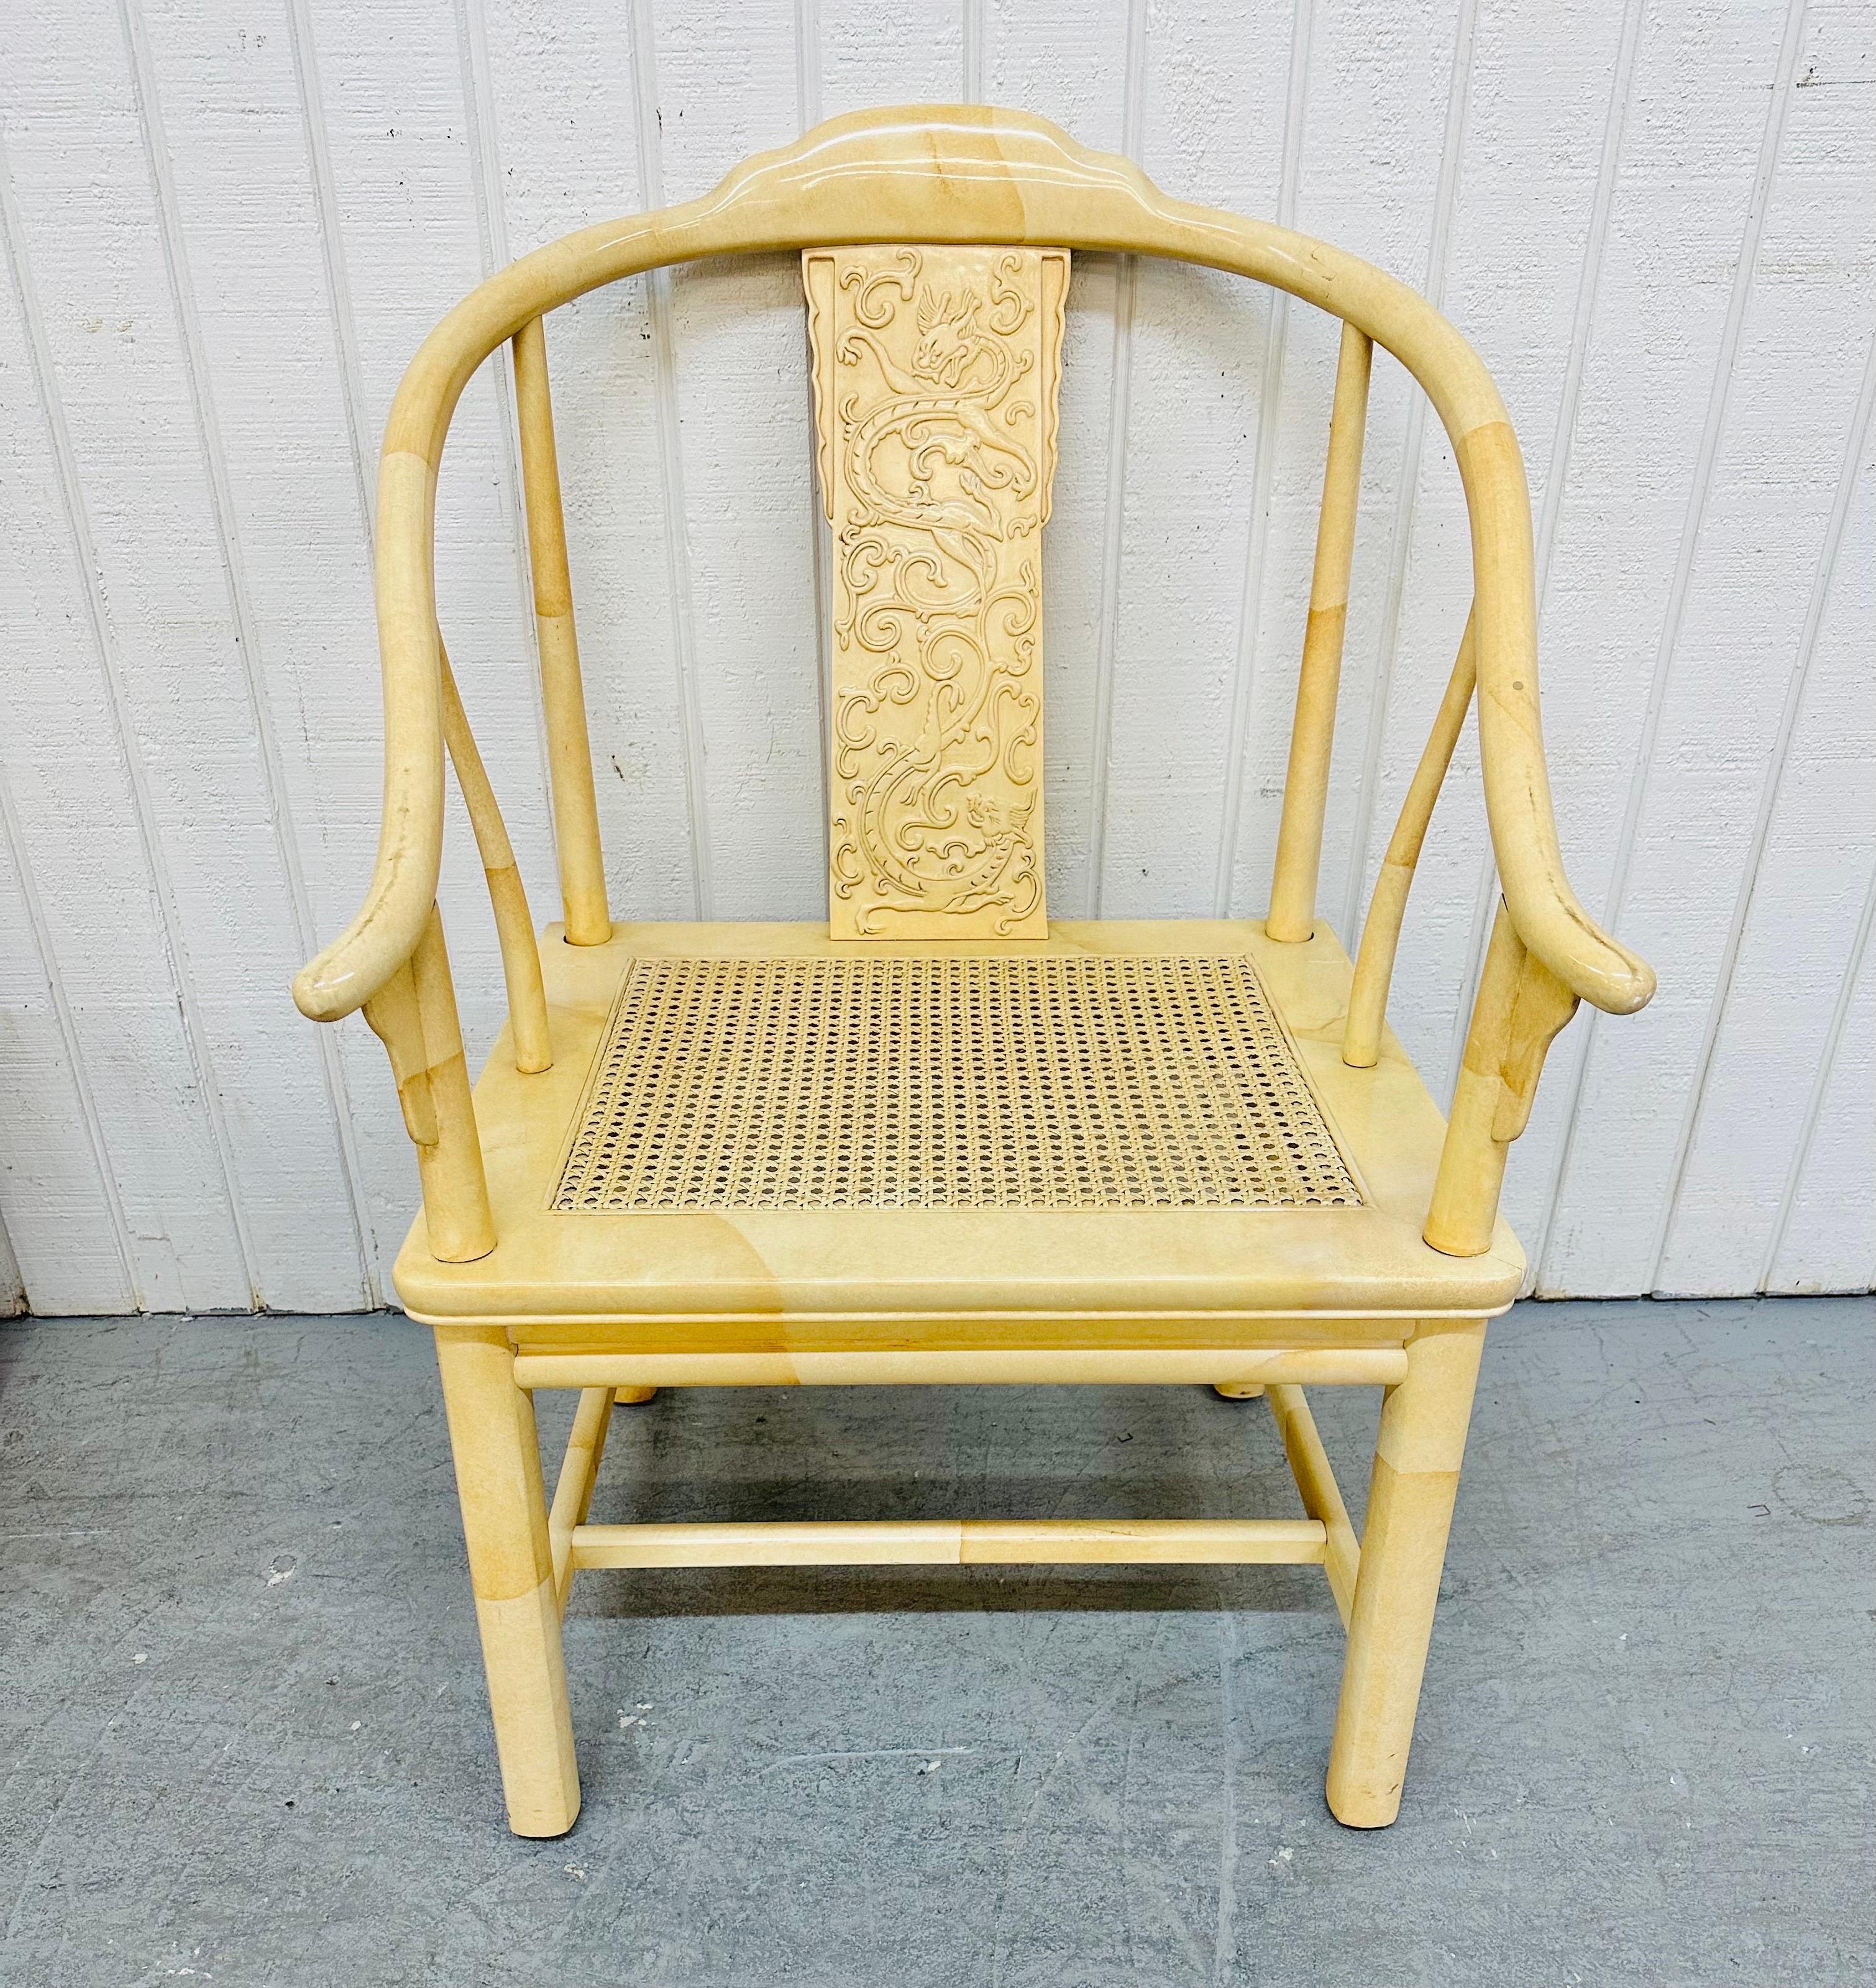 henredon chairs vintage